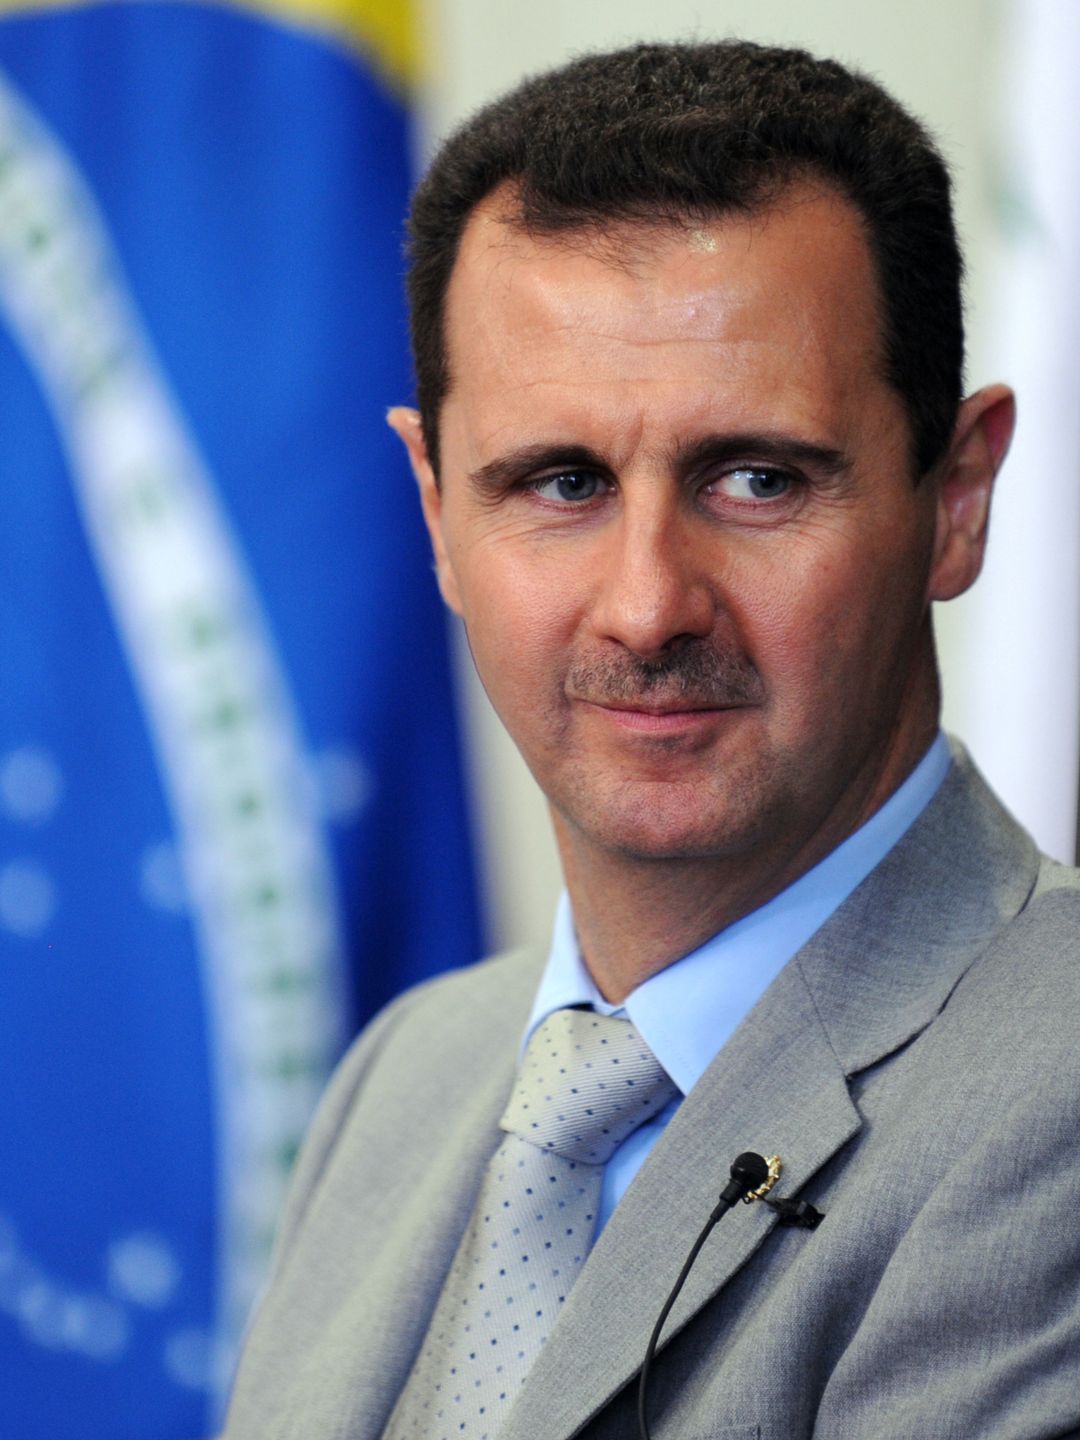 Bashar Assad who are his parents